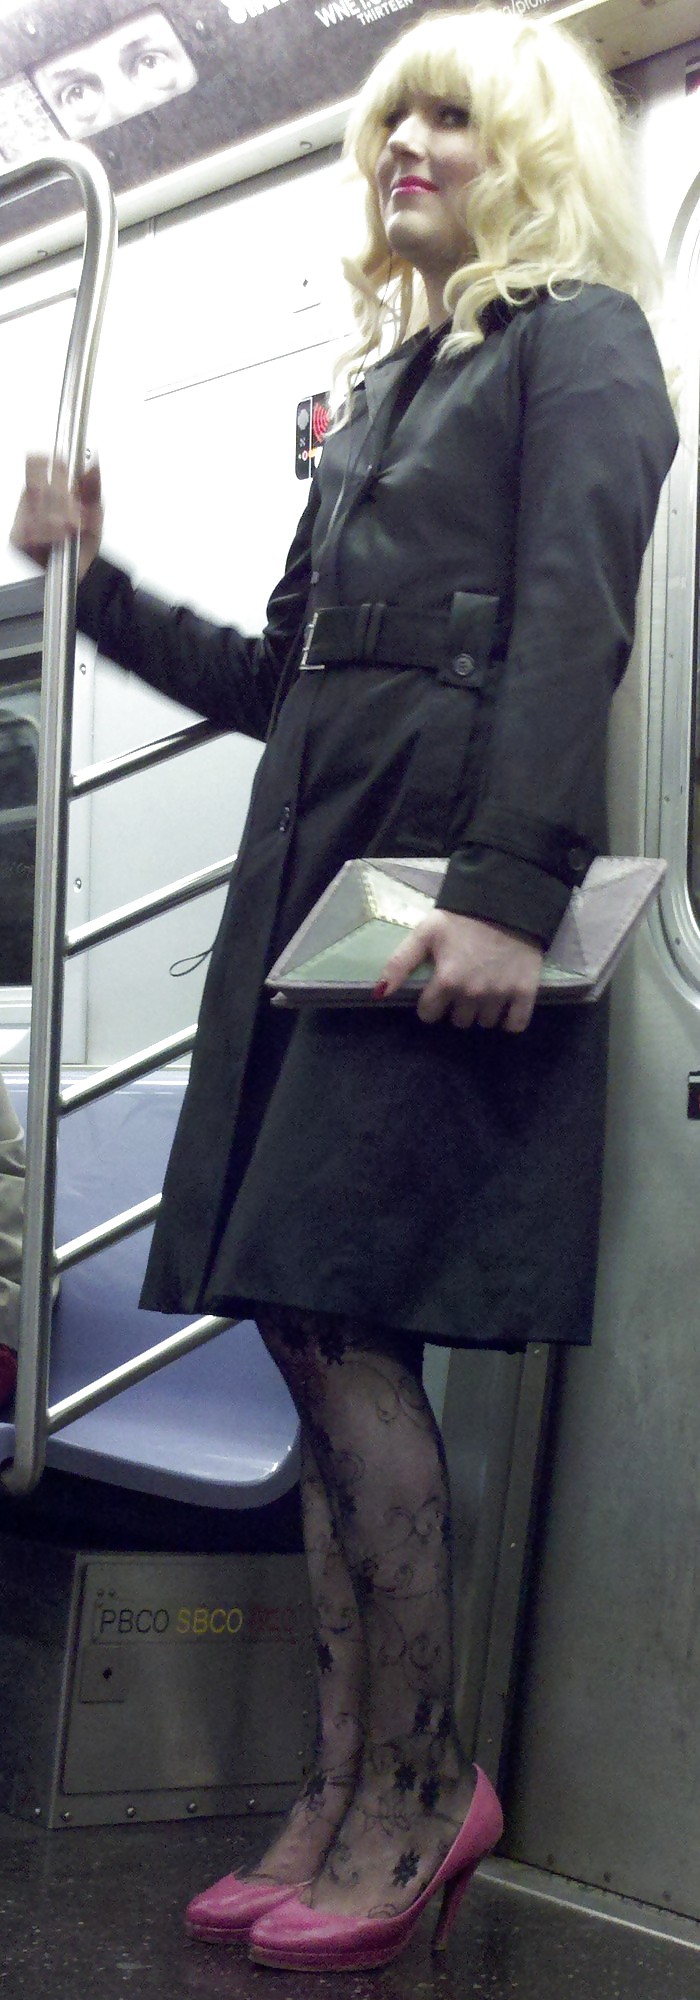 New York Subway Girls 107 Dude Looks Like a Lady #6603938